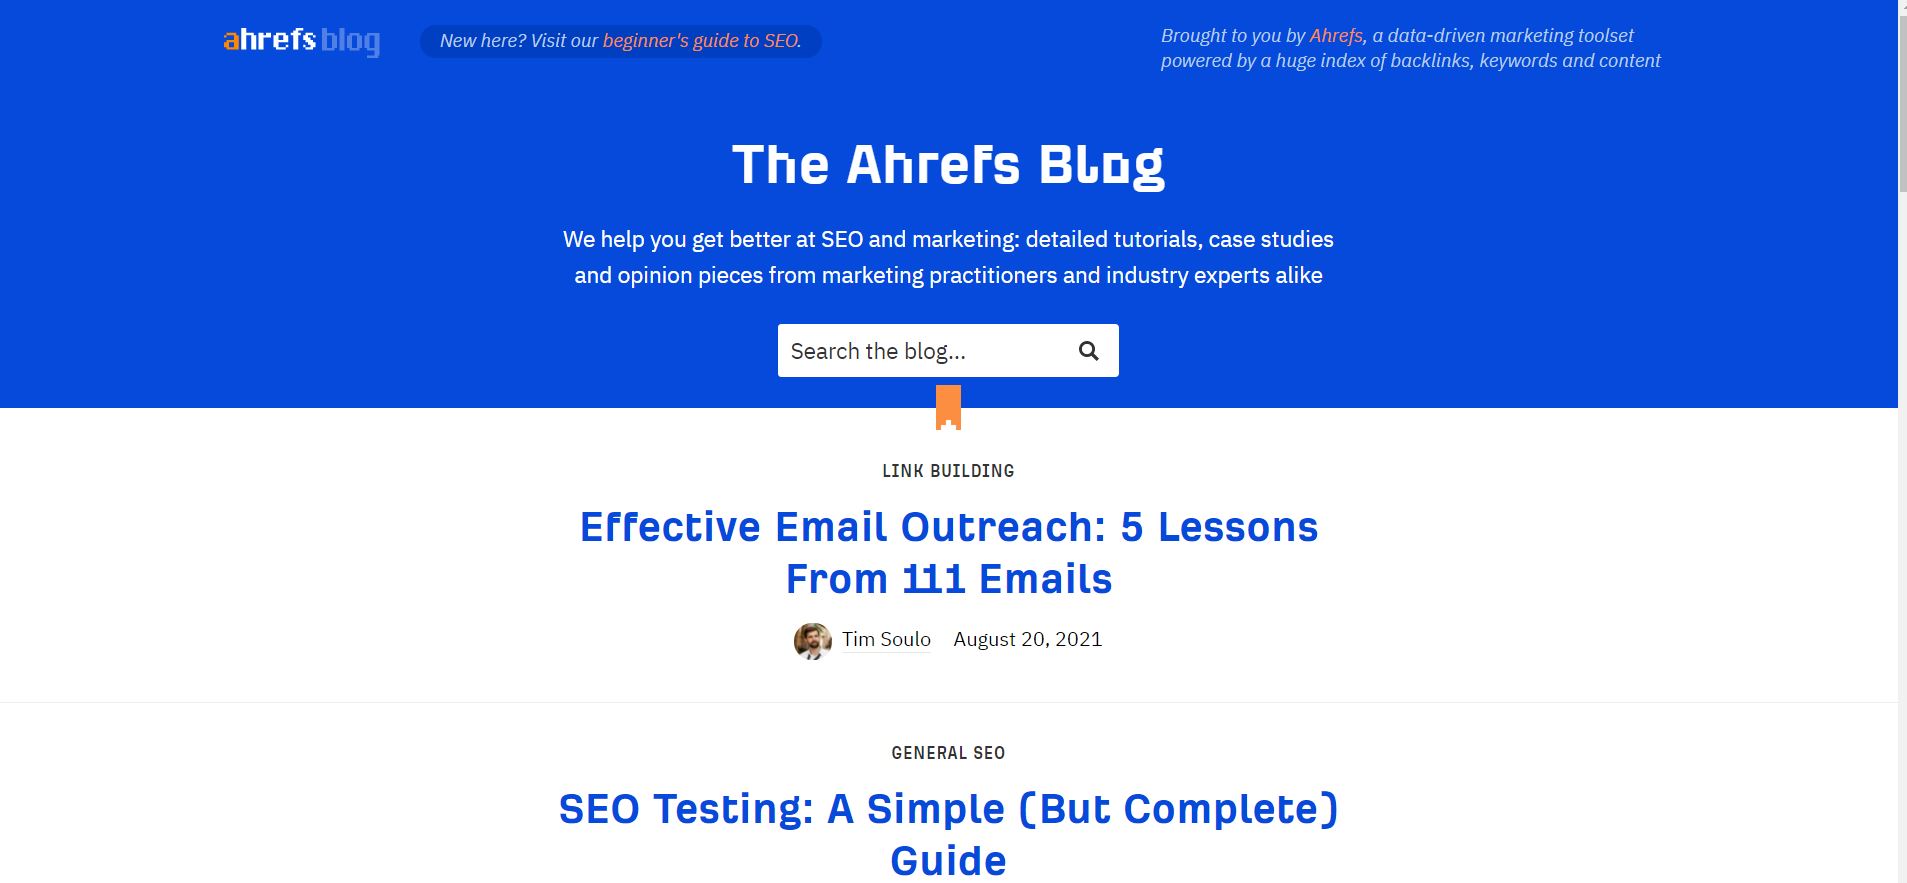 Ahrefs Blog